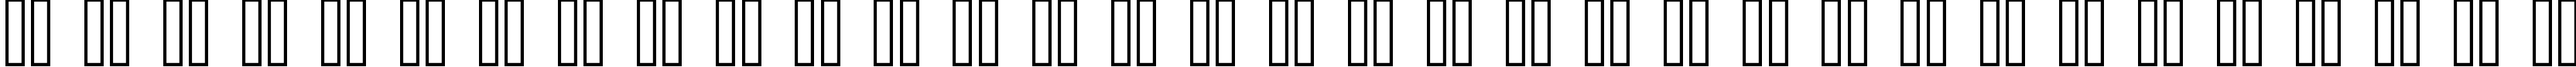 Пример написания русского алфавита шрифтом Guadalupe